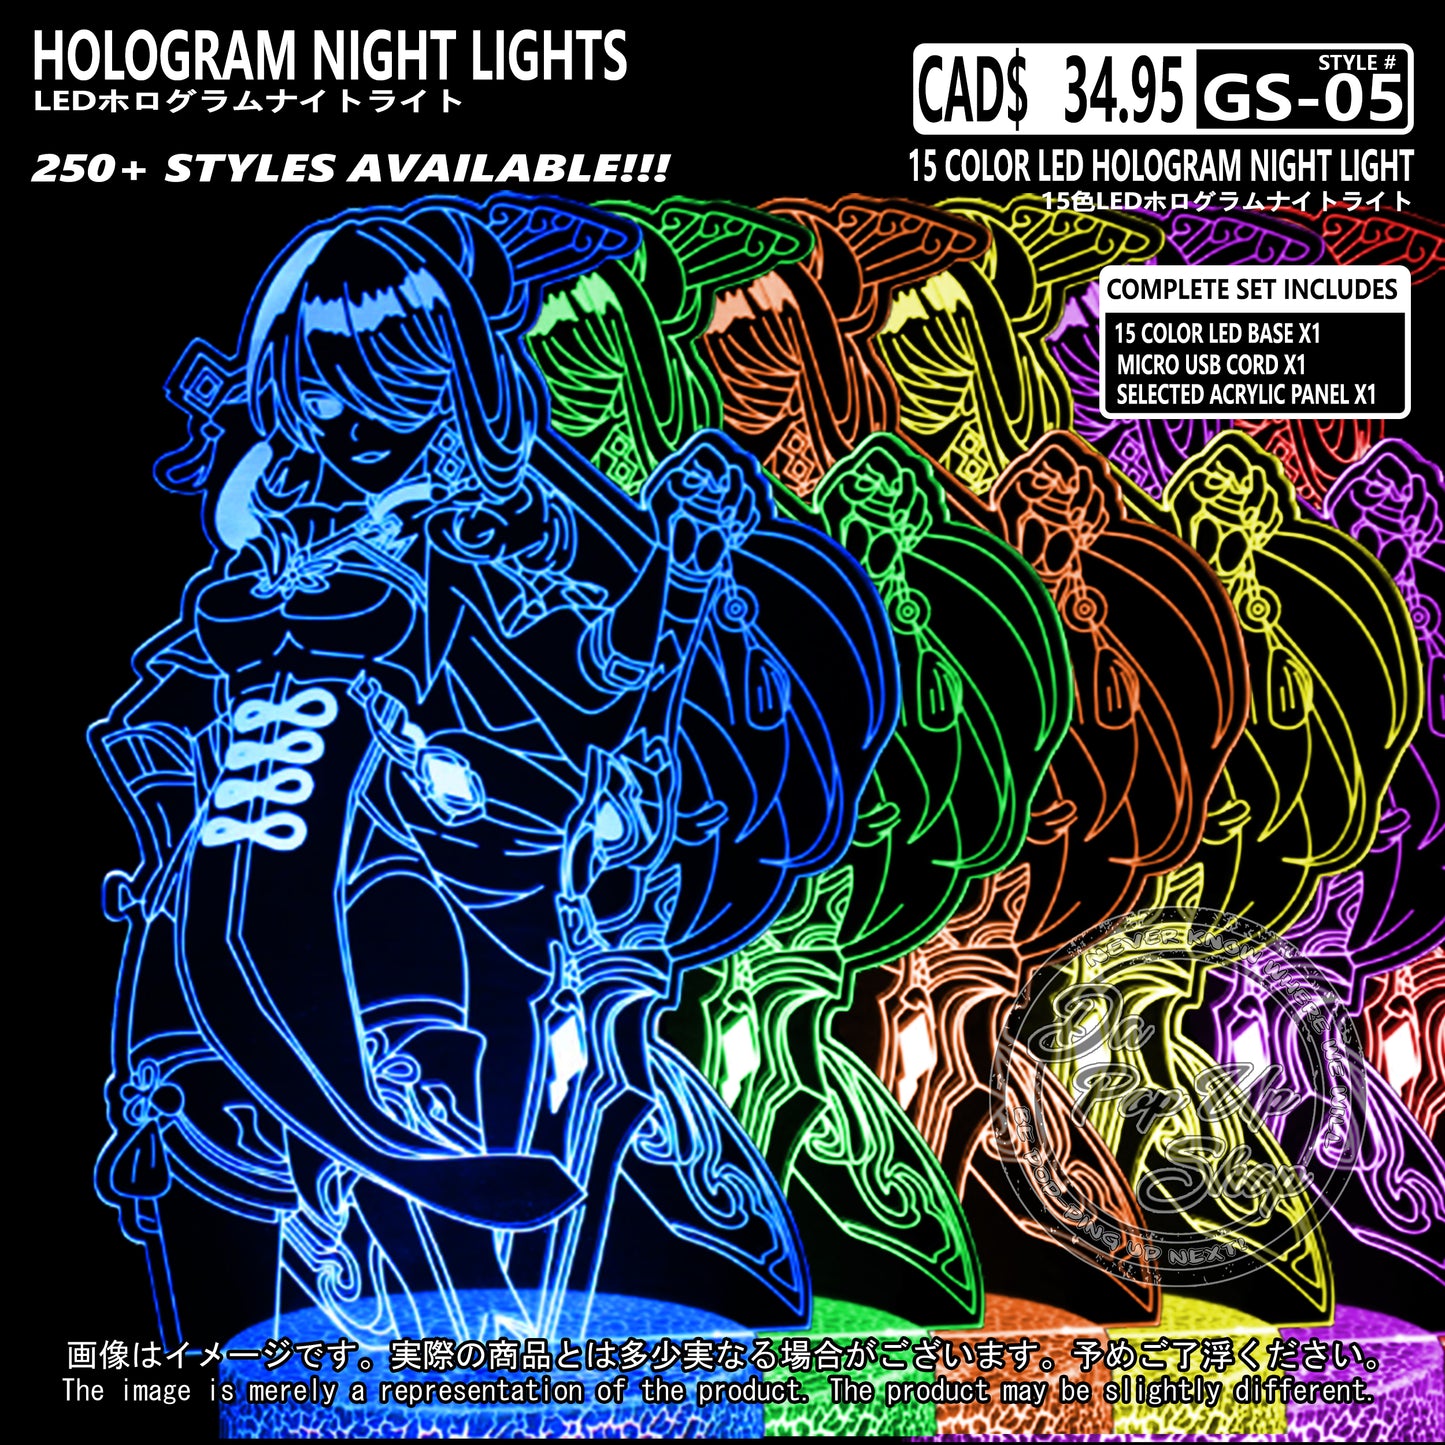 (GS-05) BEIDOU Genshin Impact Hologram LED Night Light